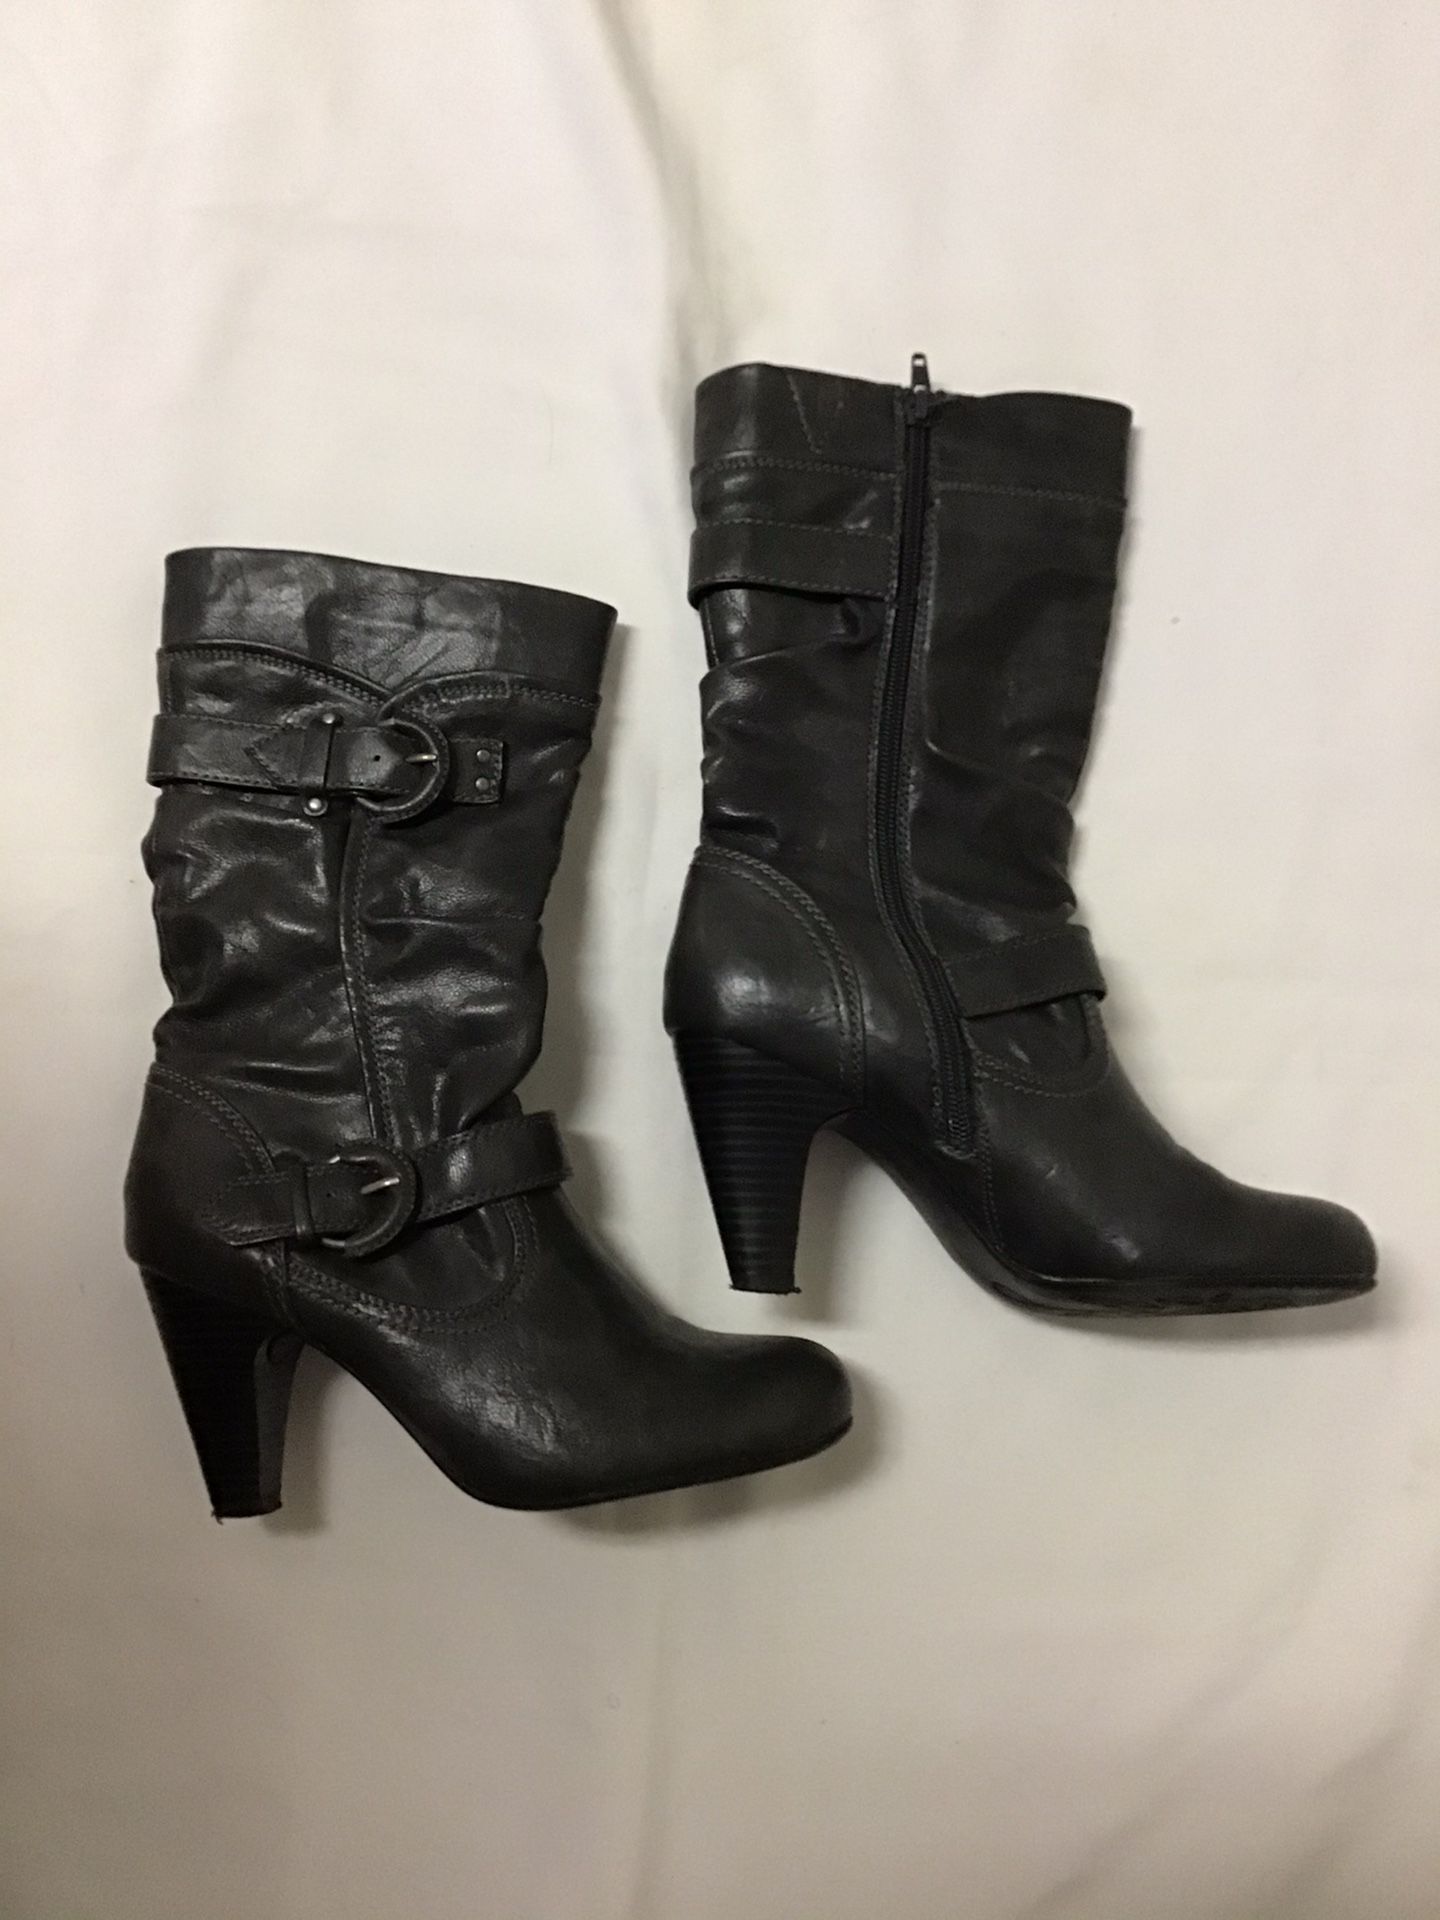 Women’s RIALTO gray mid calf side zip heel boots… Size 7 1/2M